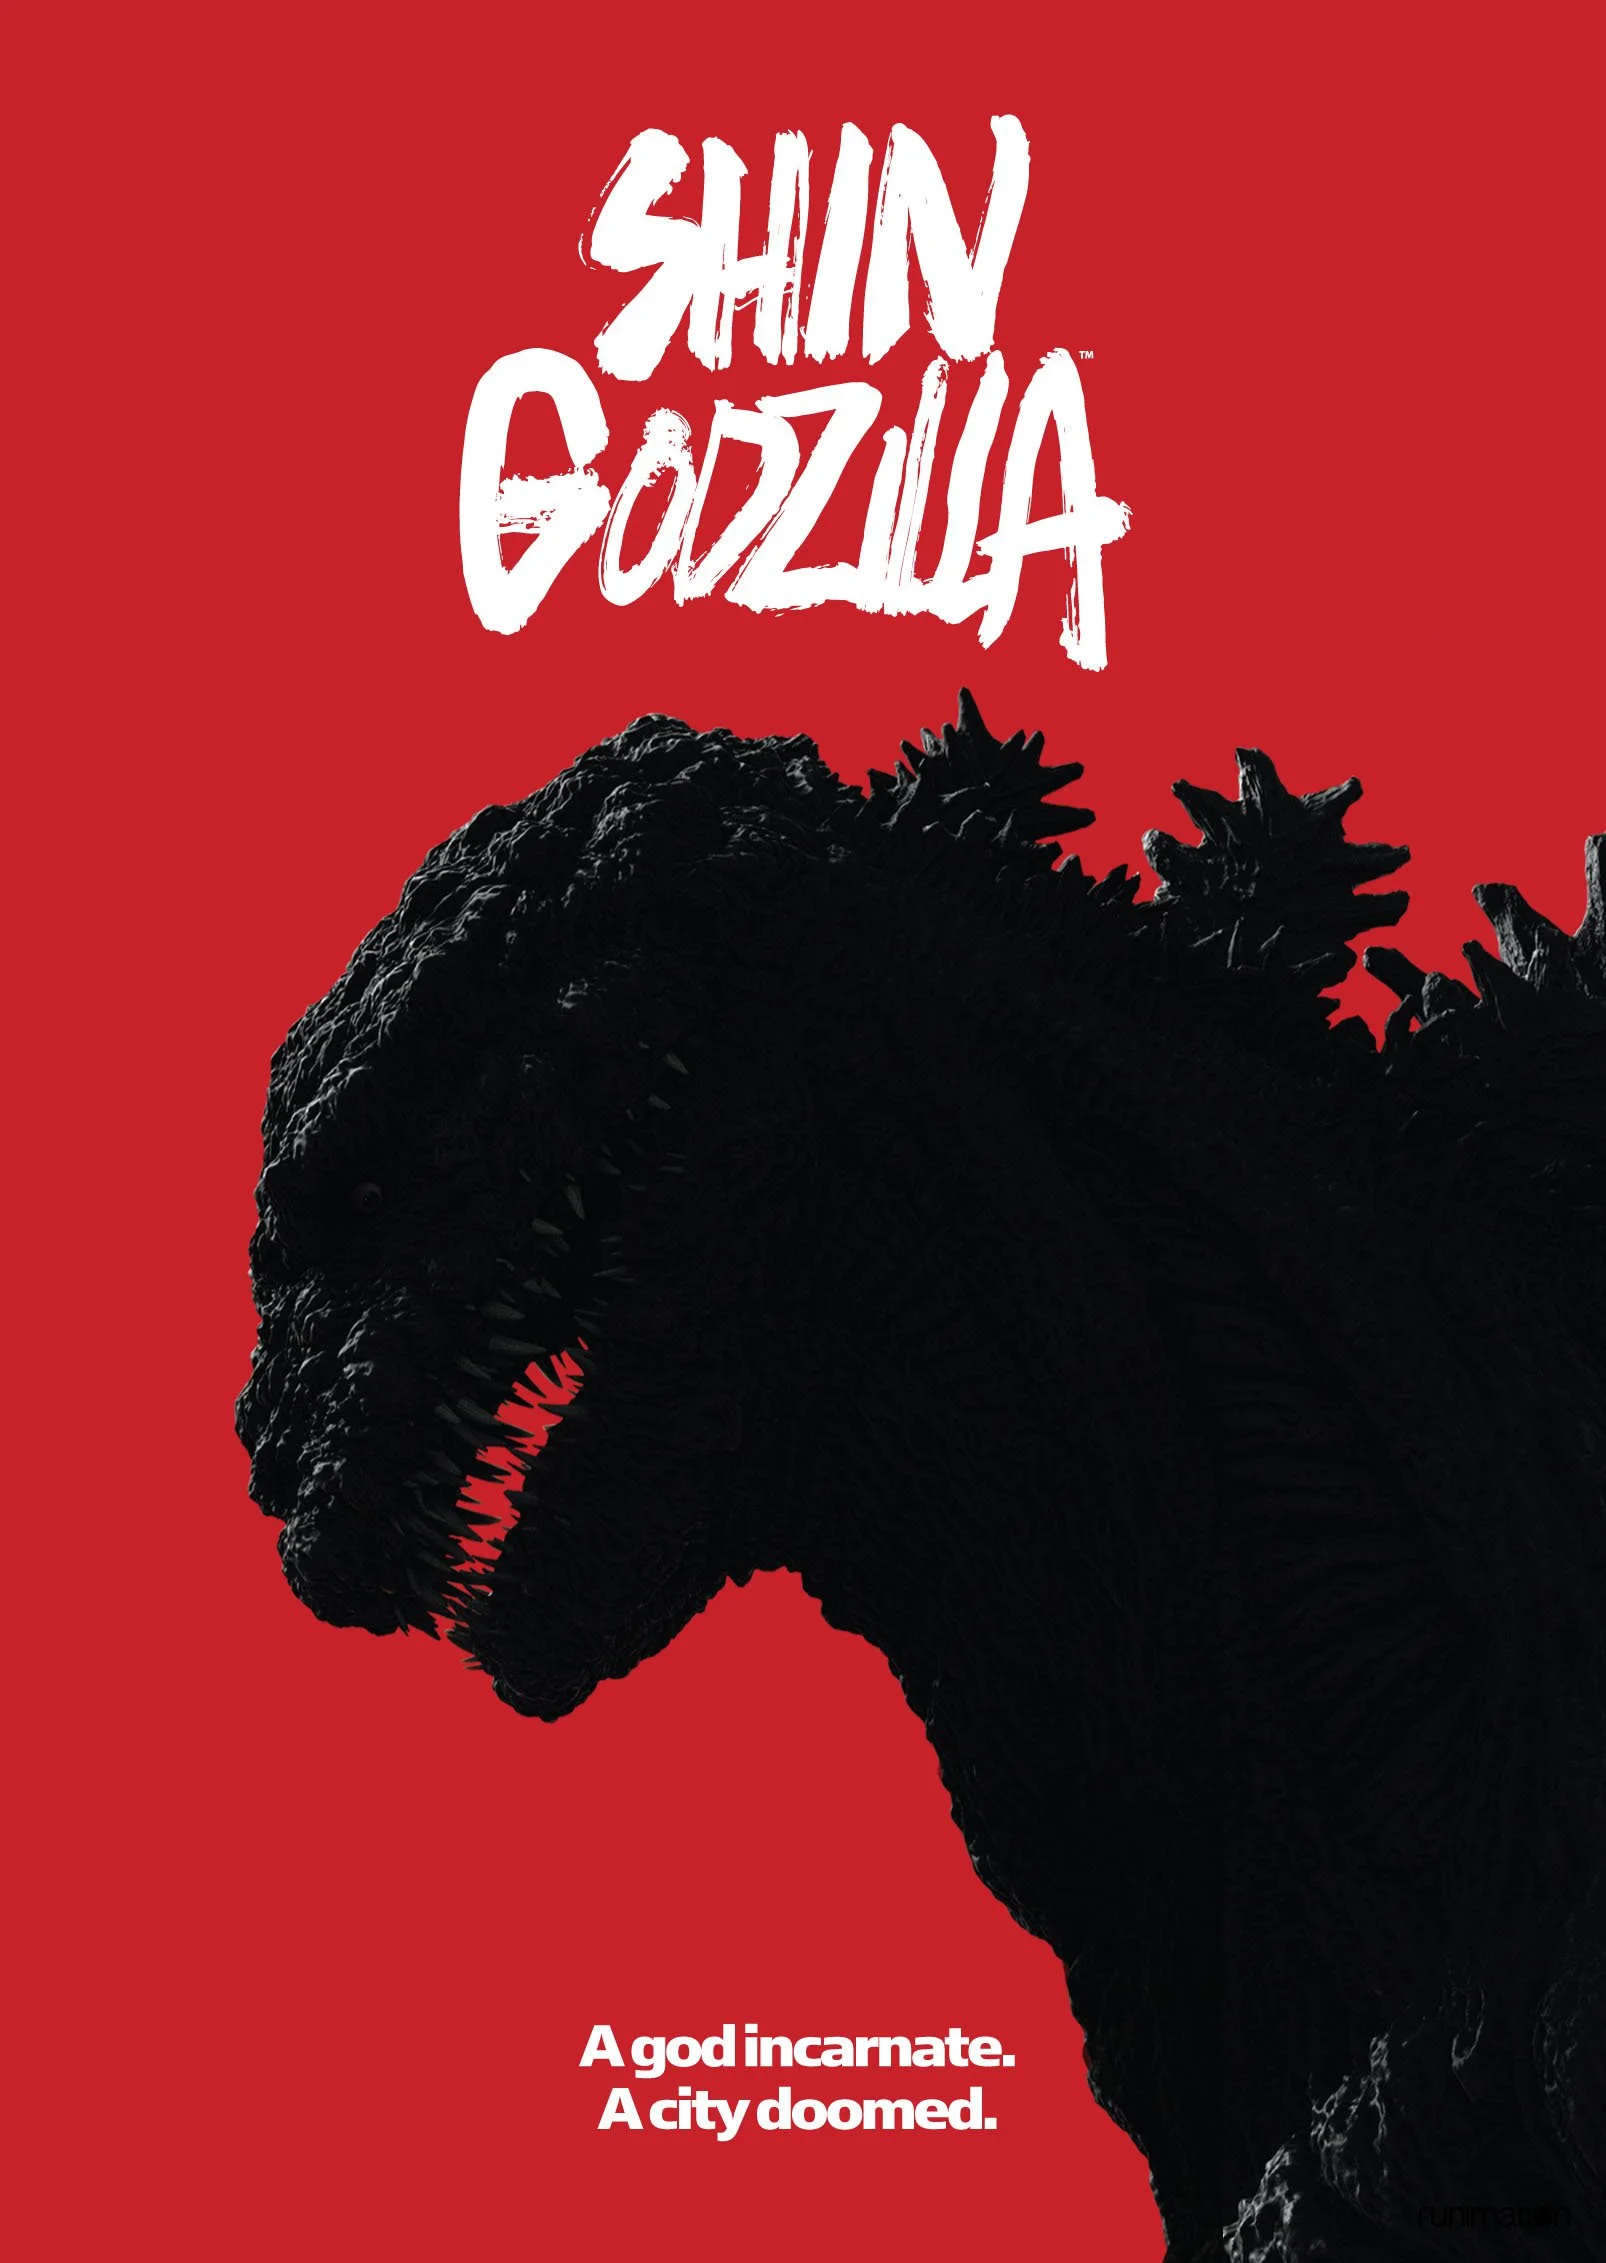 SHIN GODZILLA: Godzilla’s Mighty Return (Review)